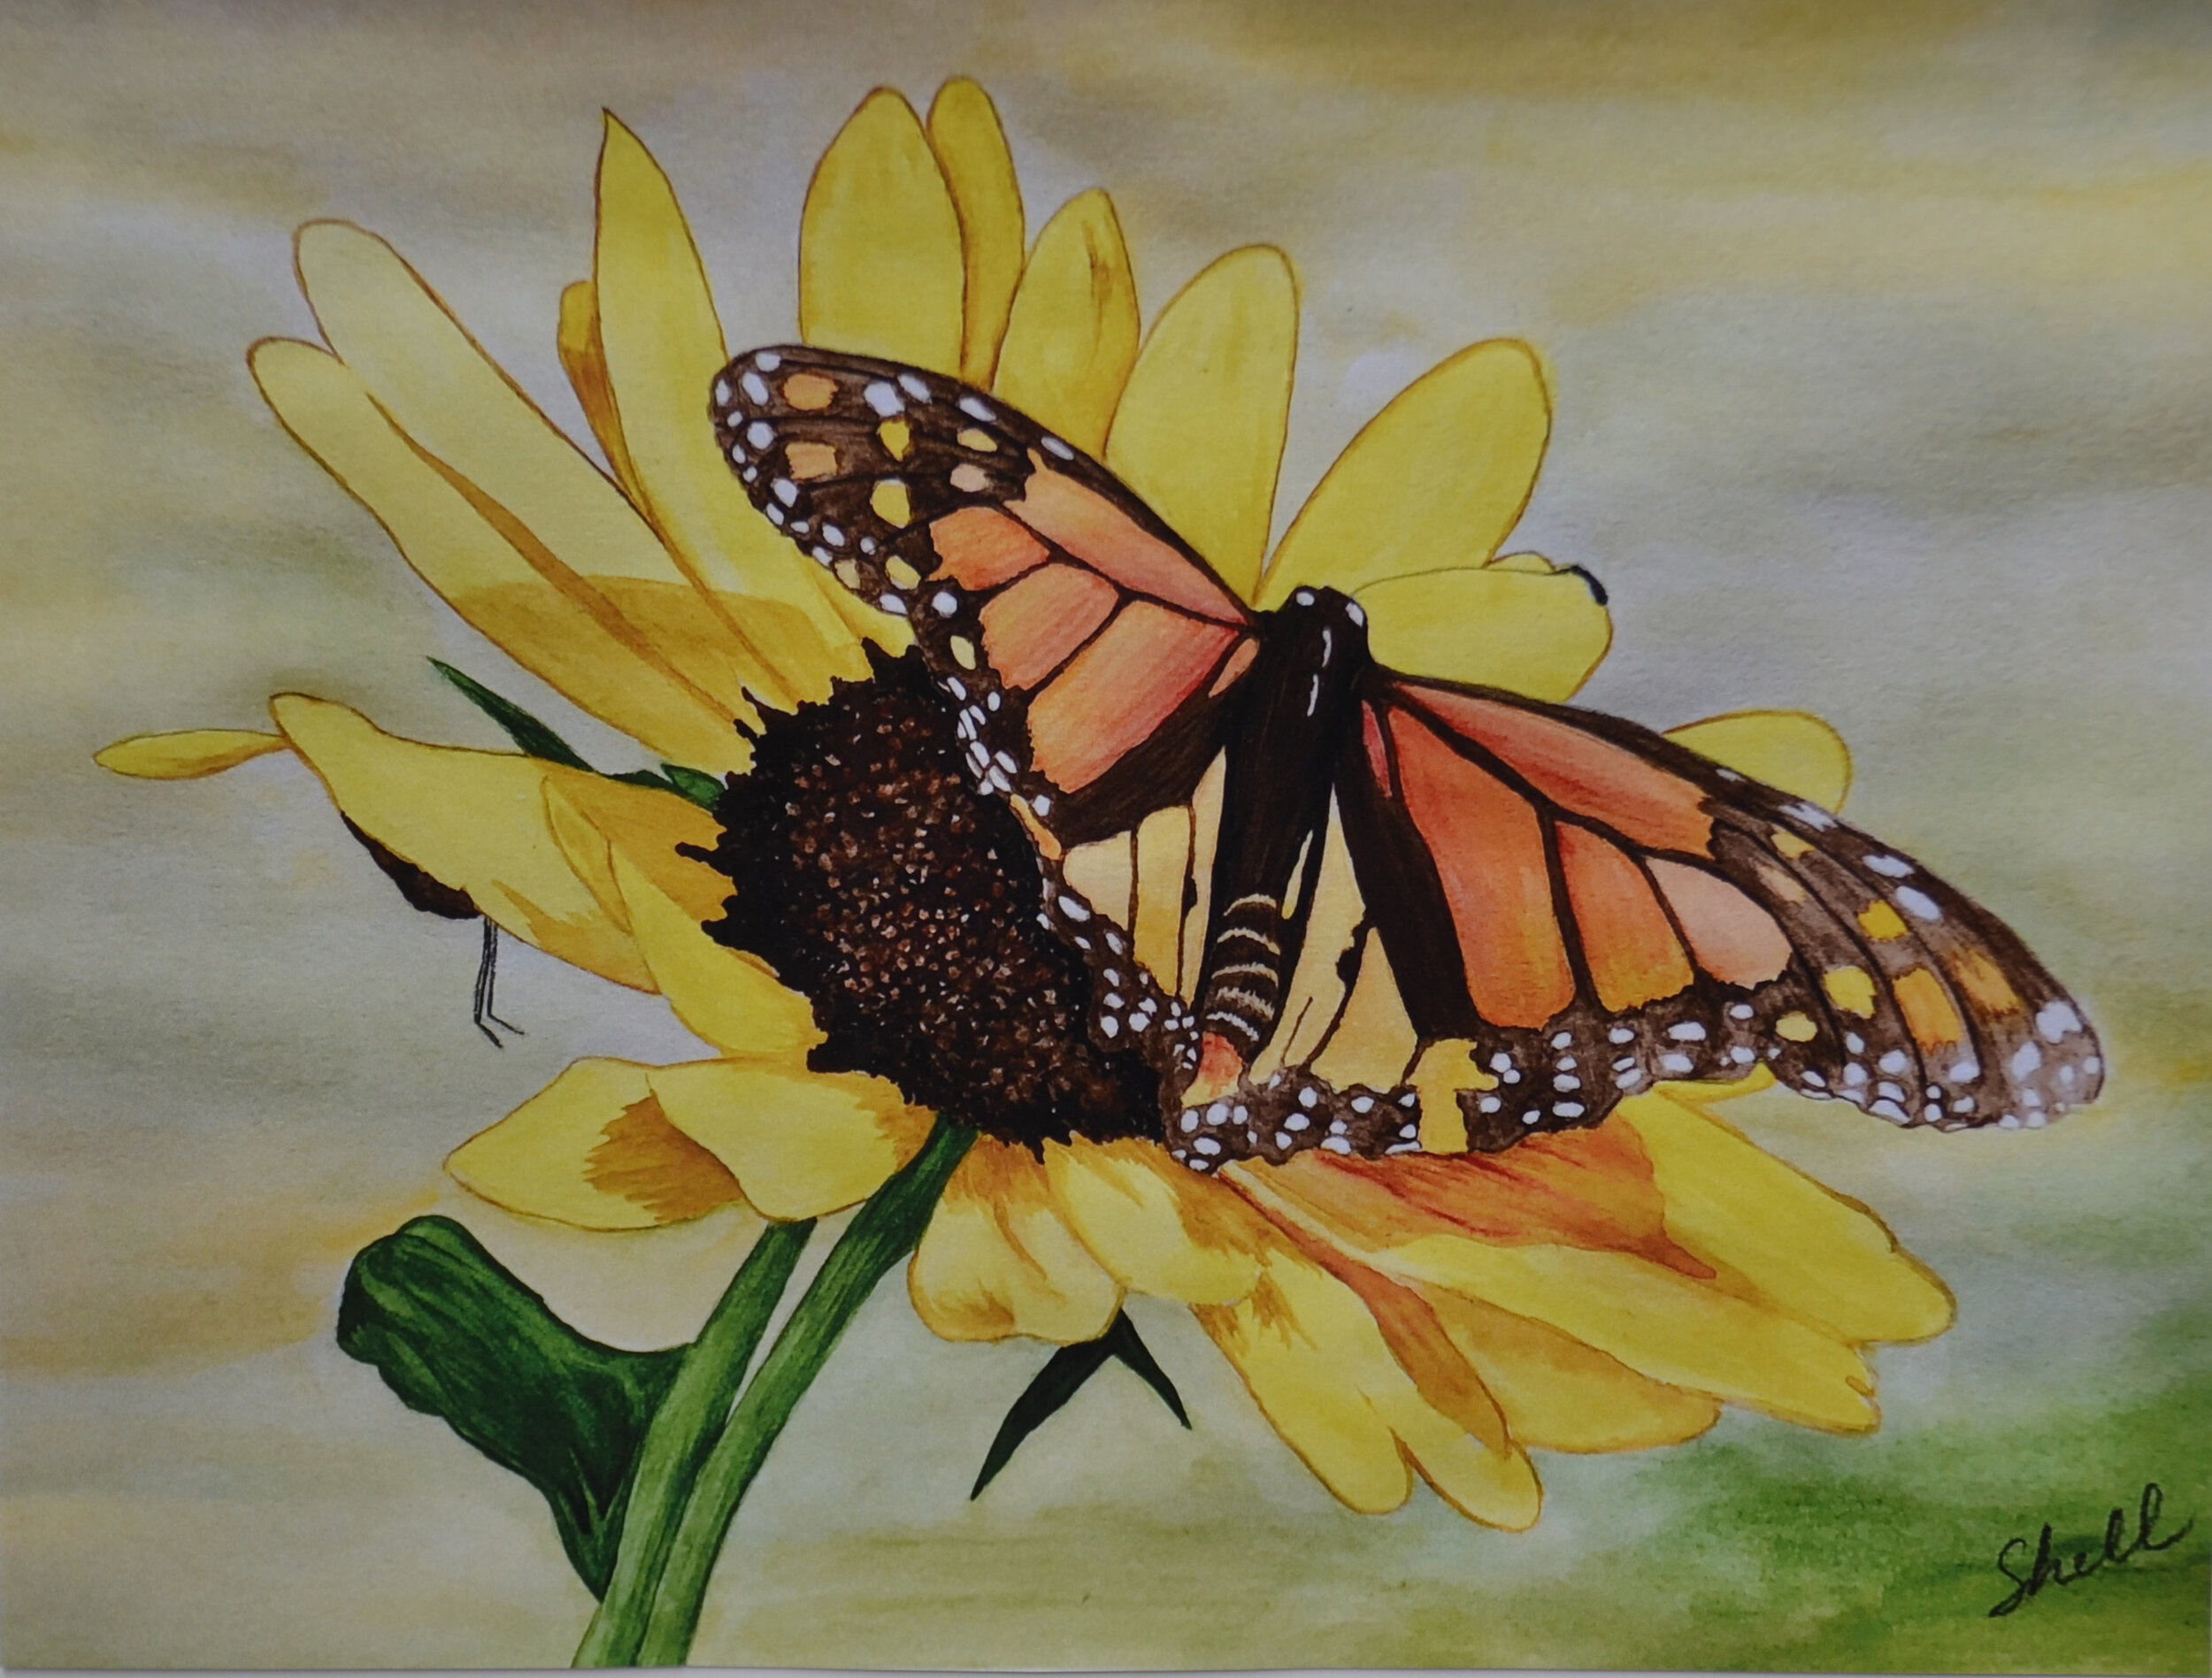 Butterfly-on-Sunflower-2019.jpg